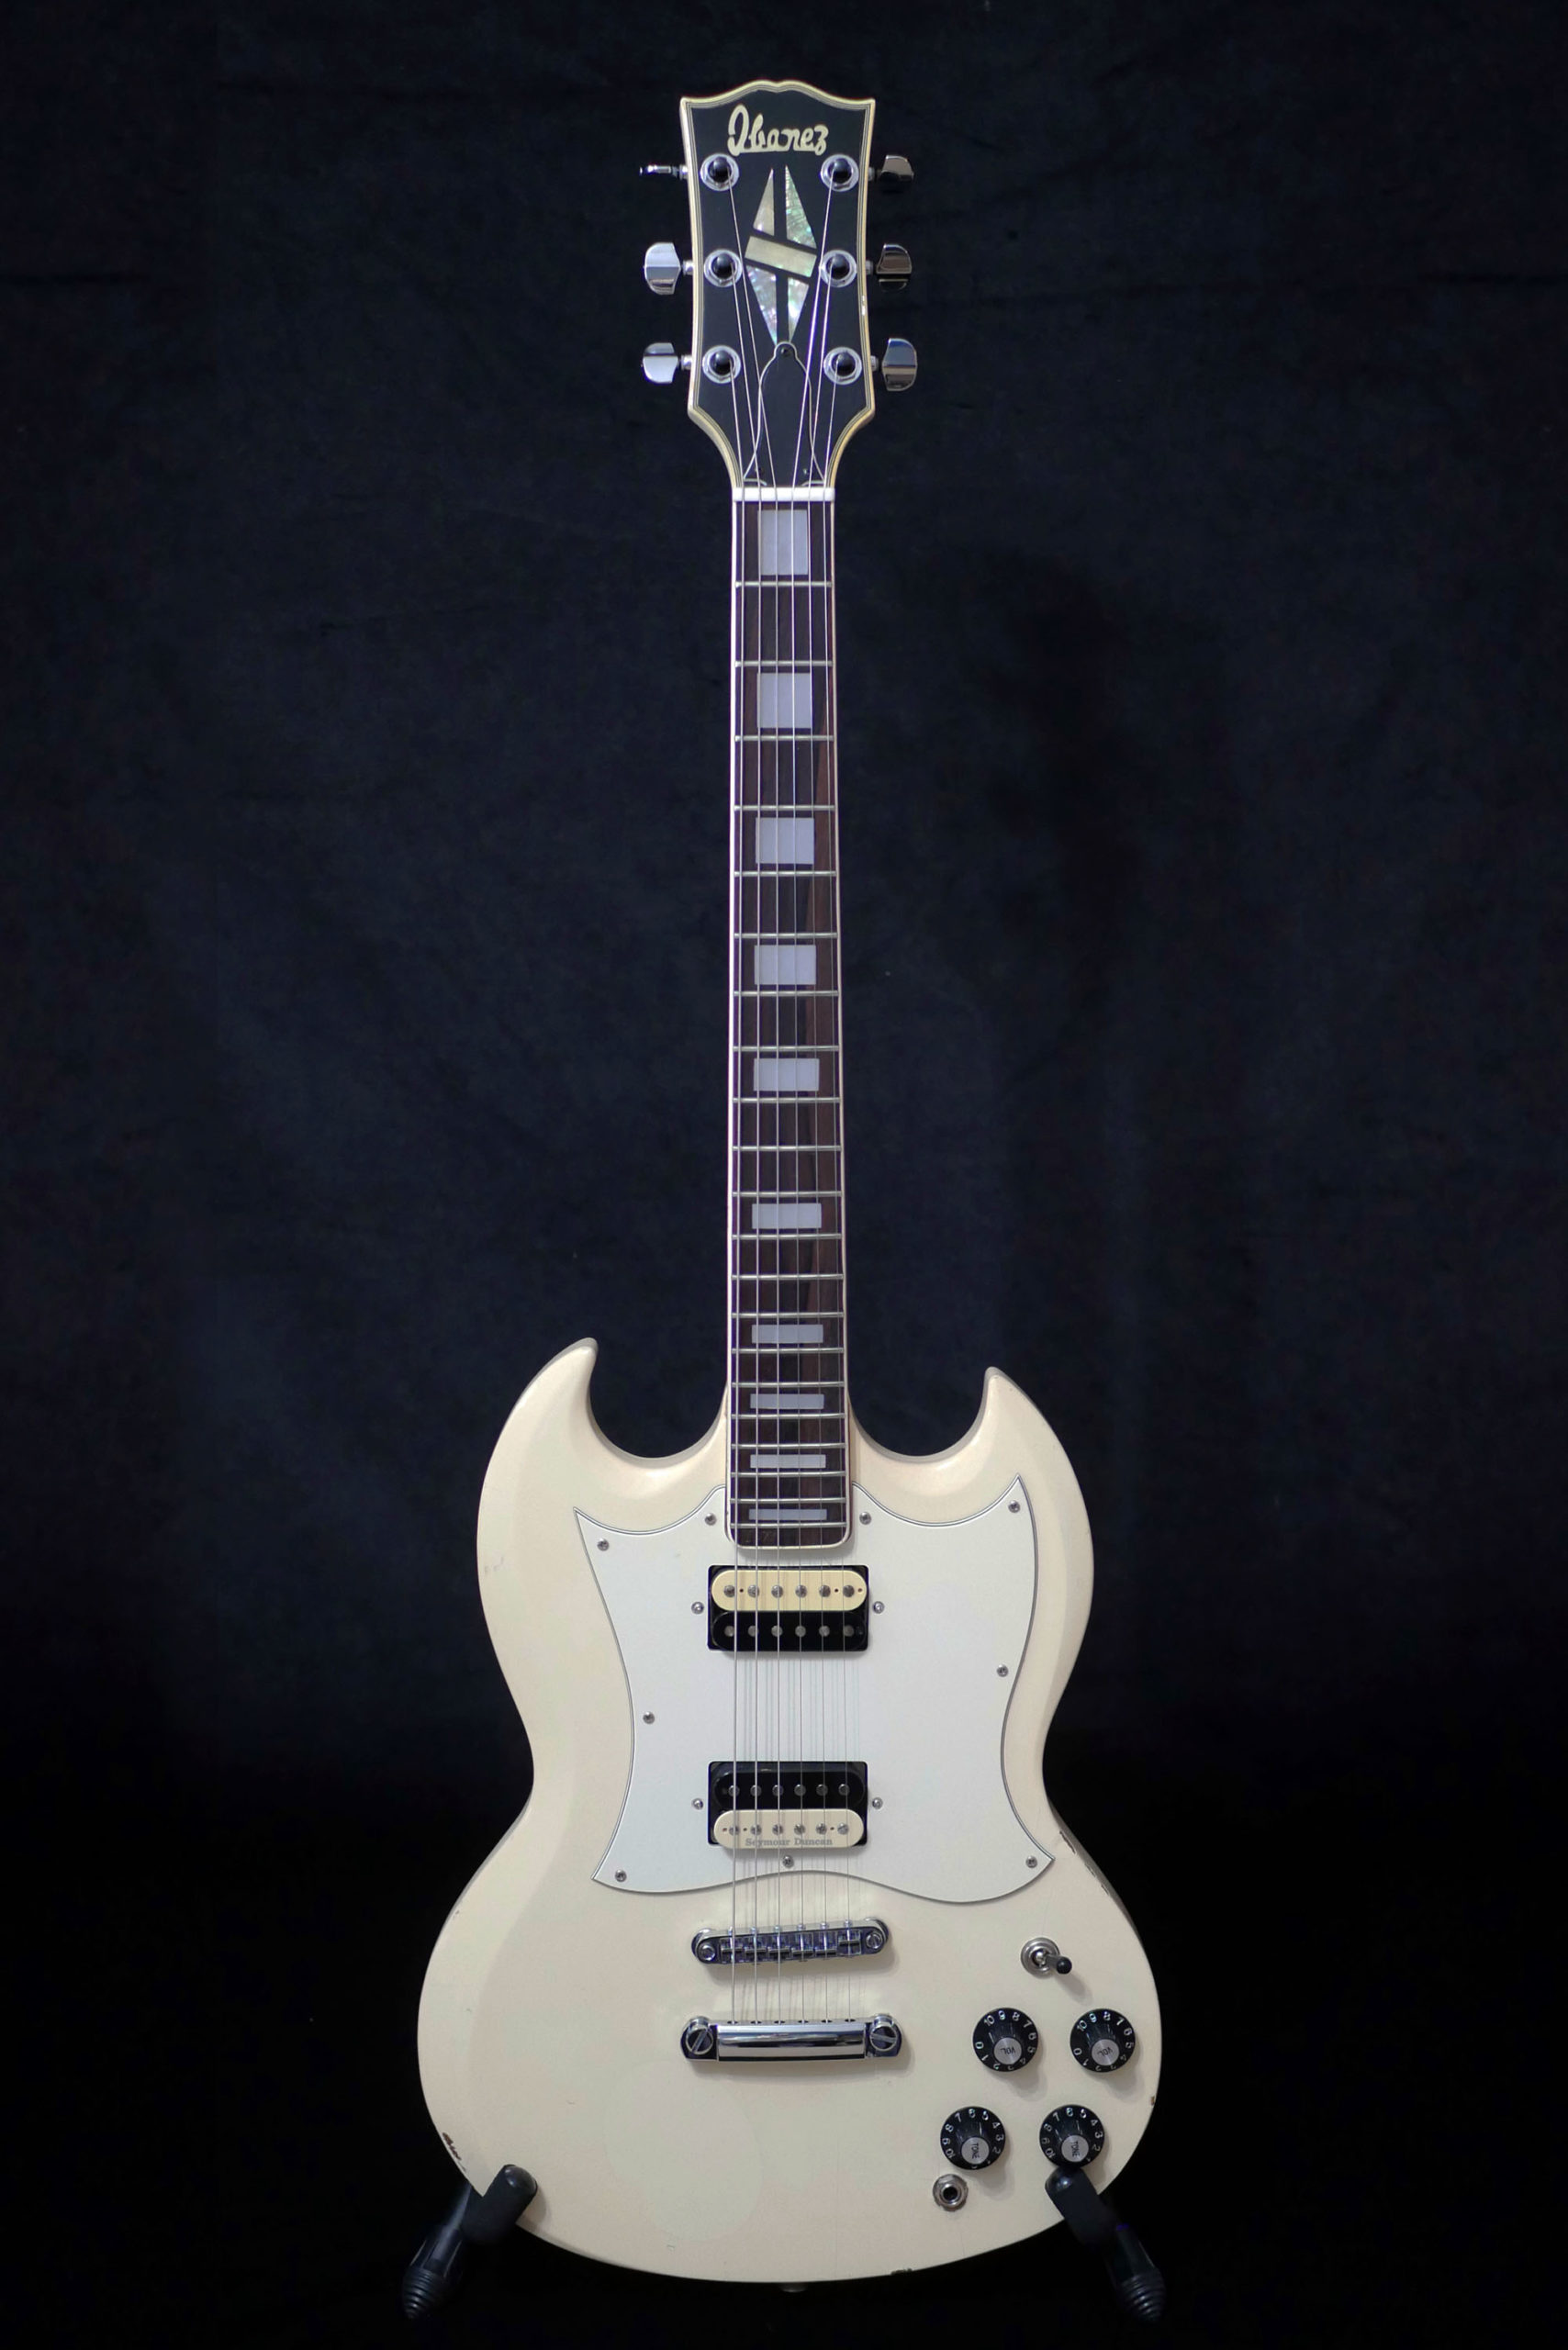 Ibanez 2354 – 1973 Gibson SG Replica | Ibanez Vintage Guitars